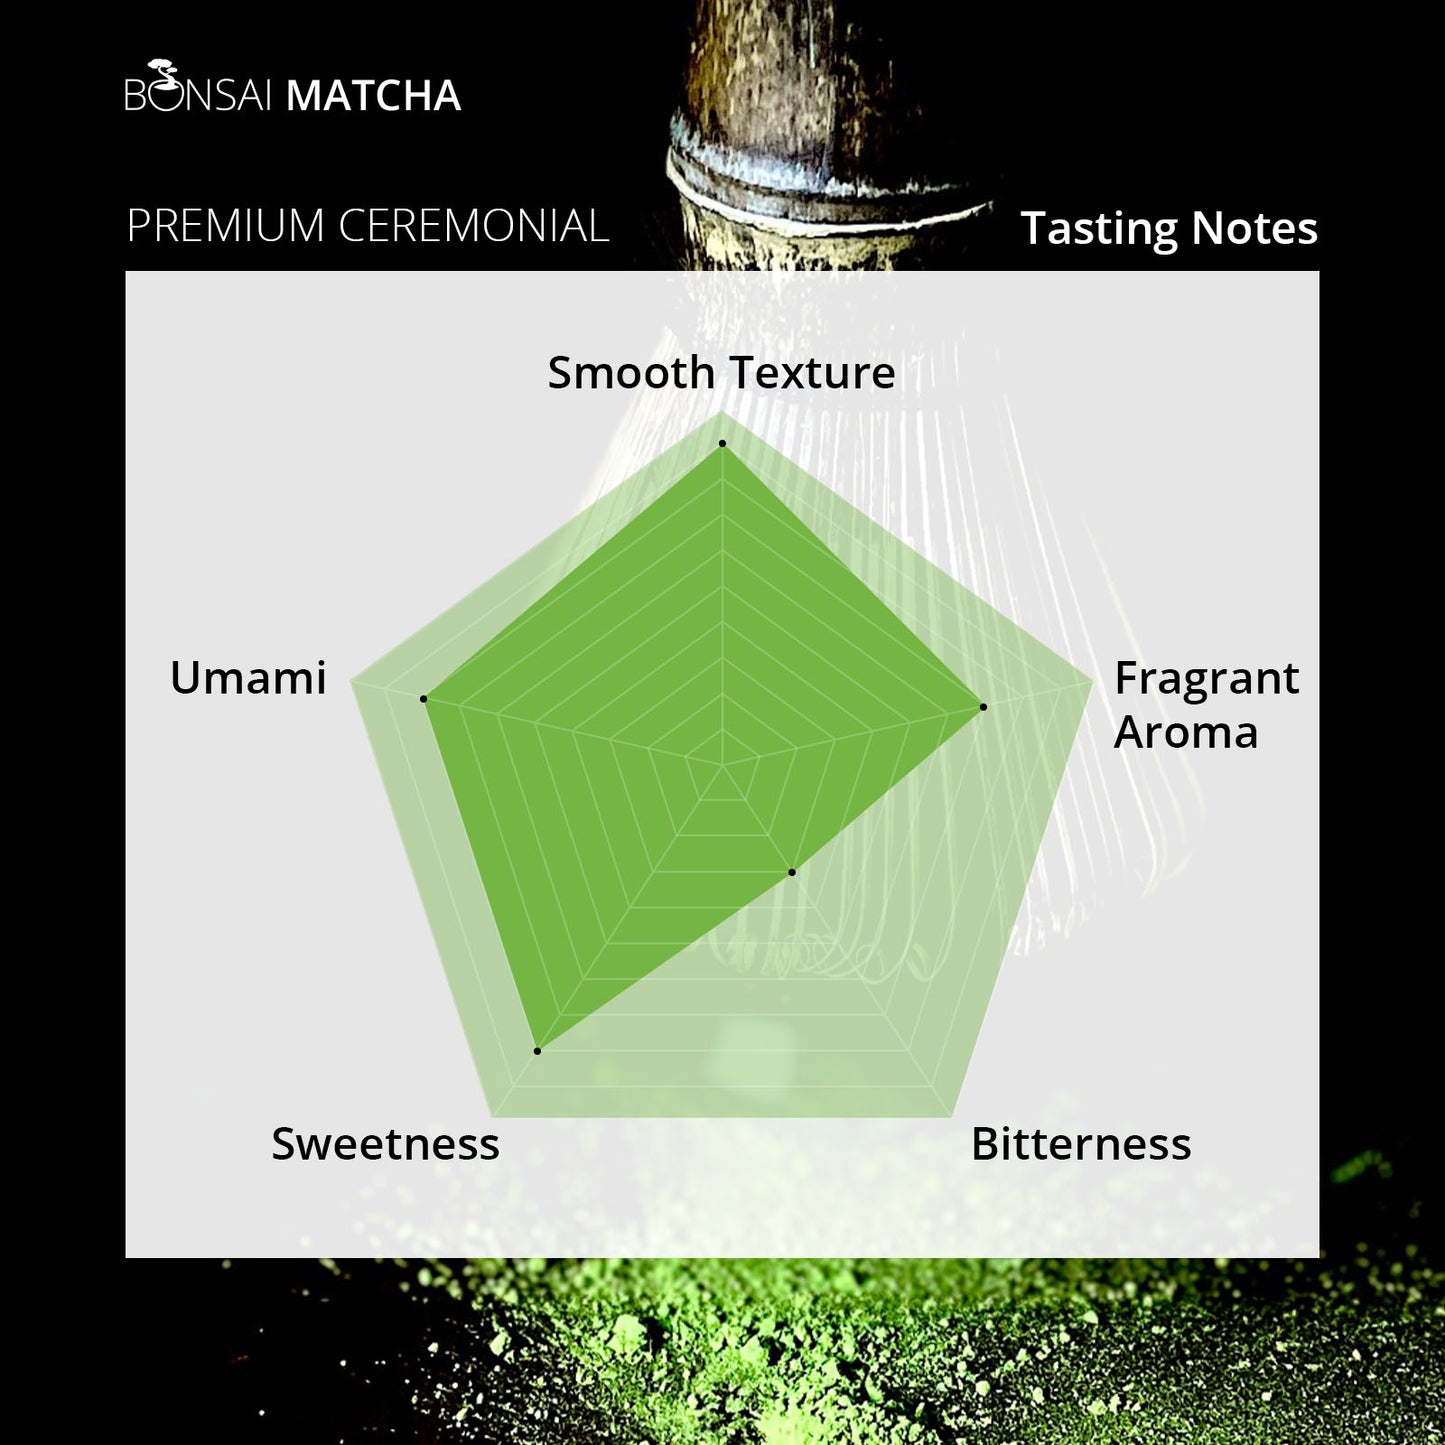 Superior Matcha Tea| Premium Ceremonial Grade | 100% Pure | Japan Green Tea Powder | Bonsai Matcha |60g